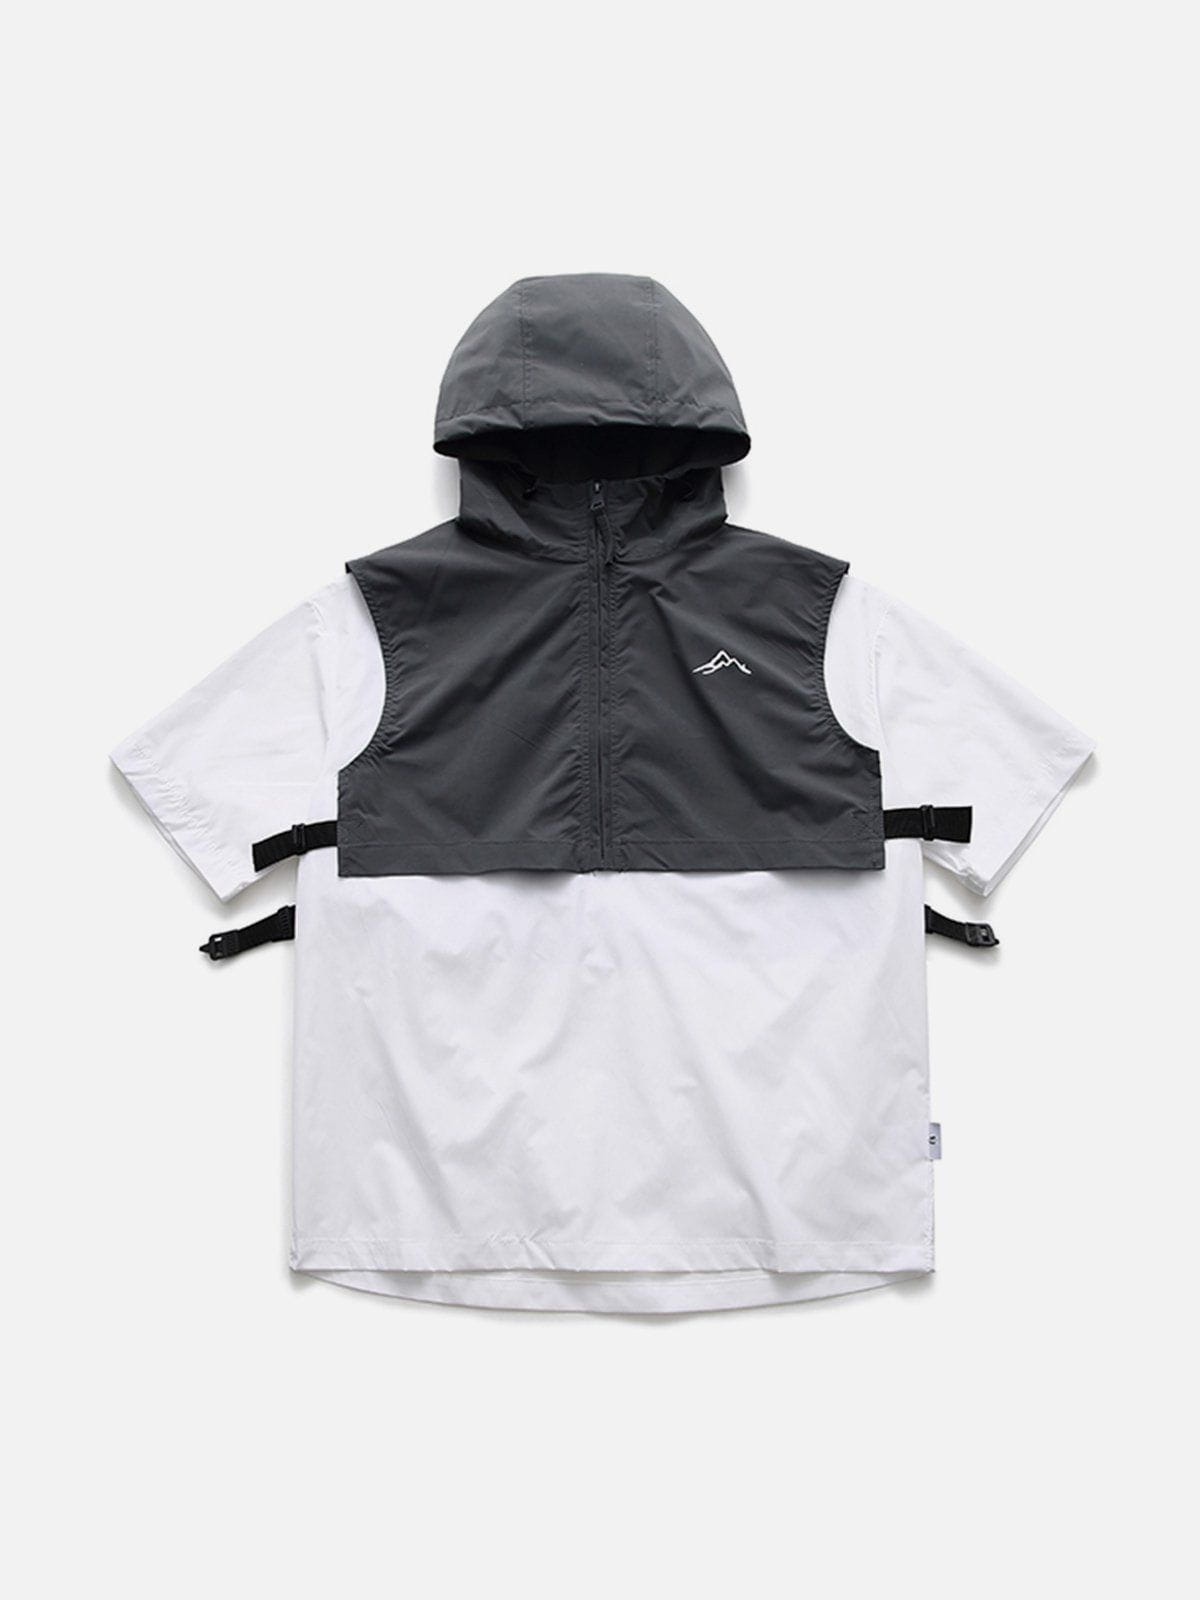 Sneakerland™ - Patchwork Vest Hooded Tee